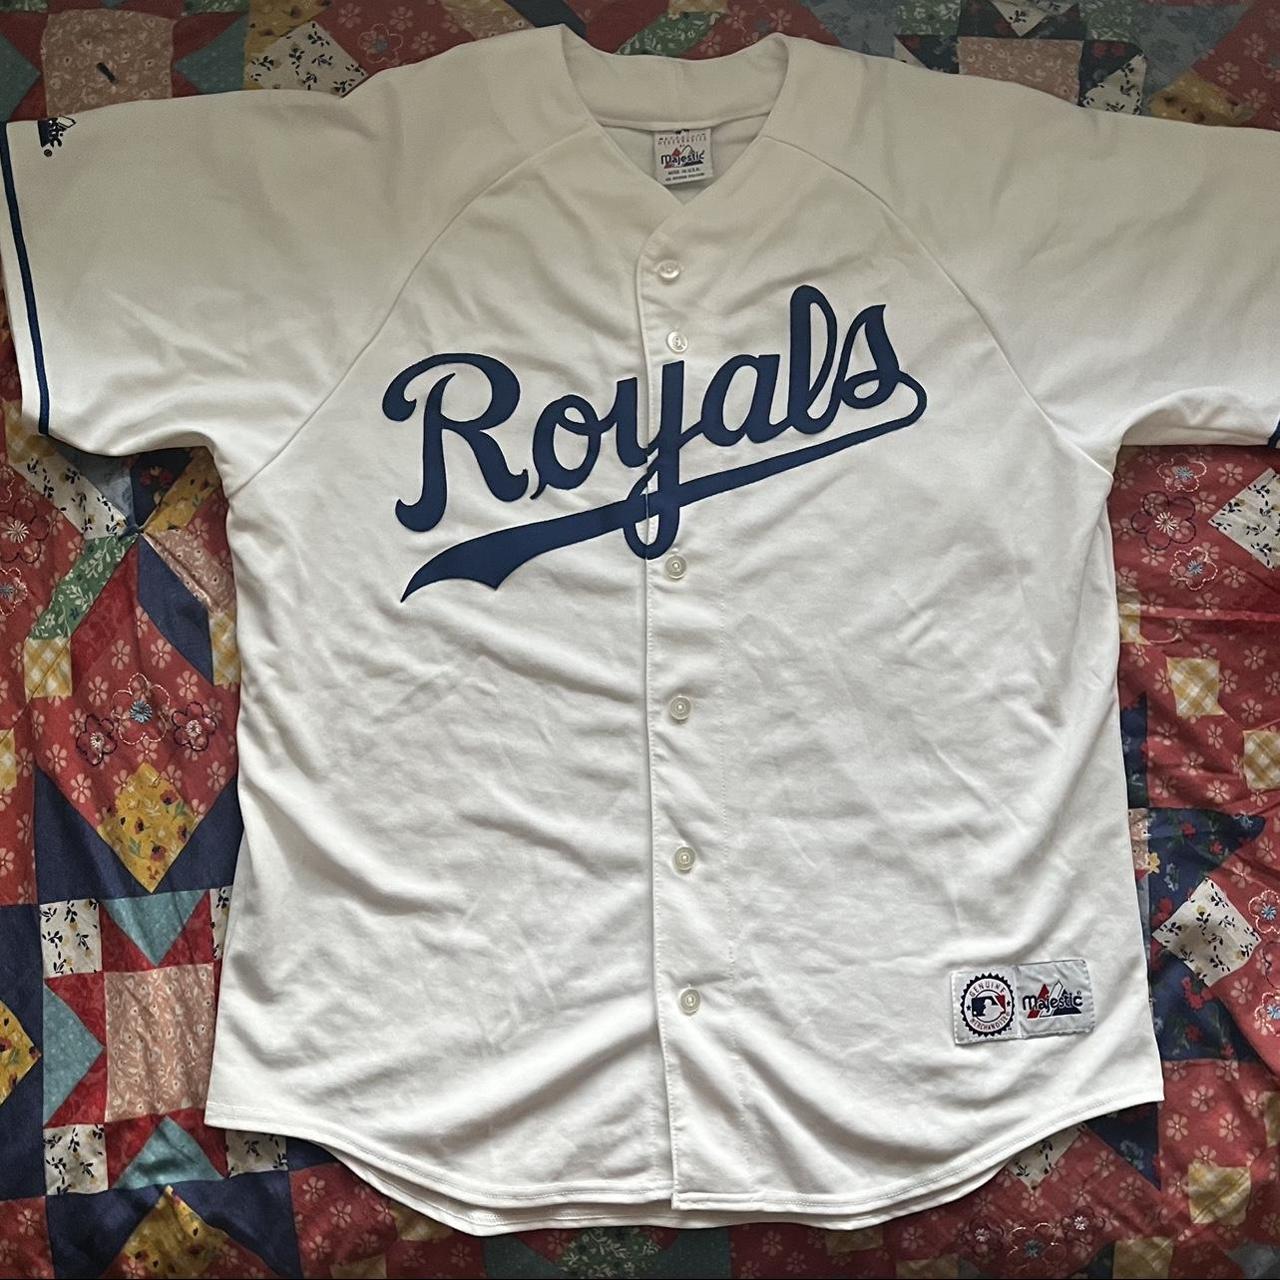 Vintage Kansas City Royals jersey